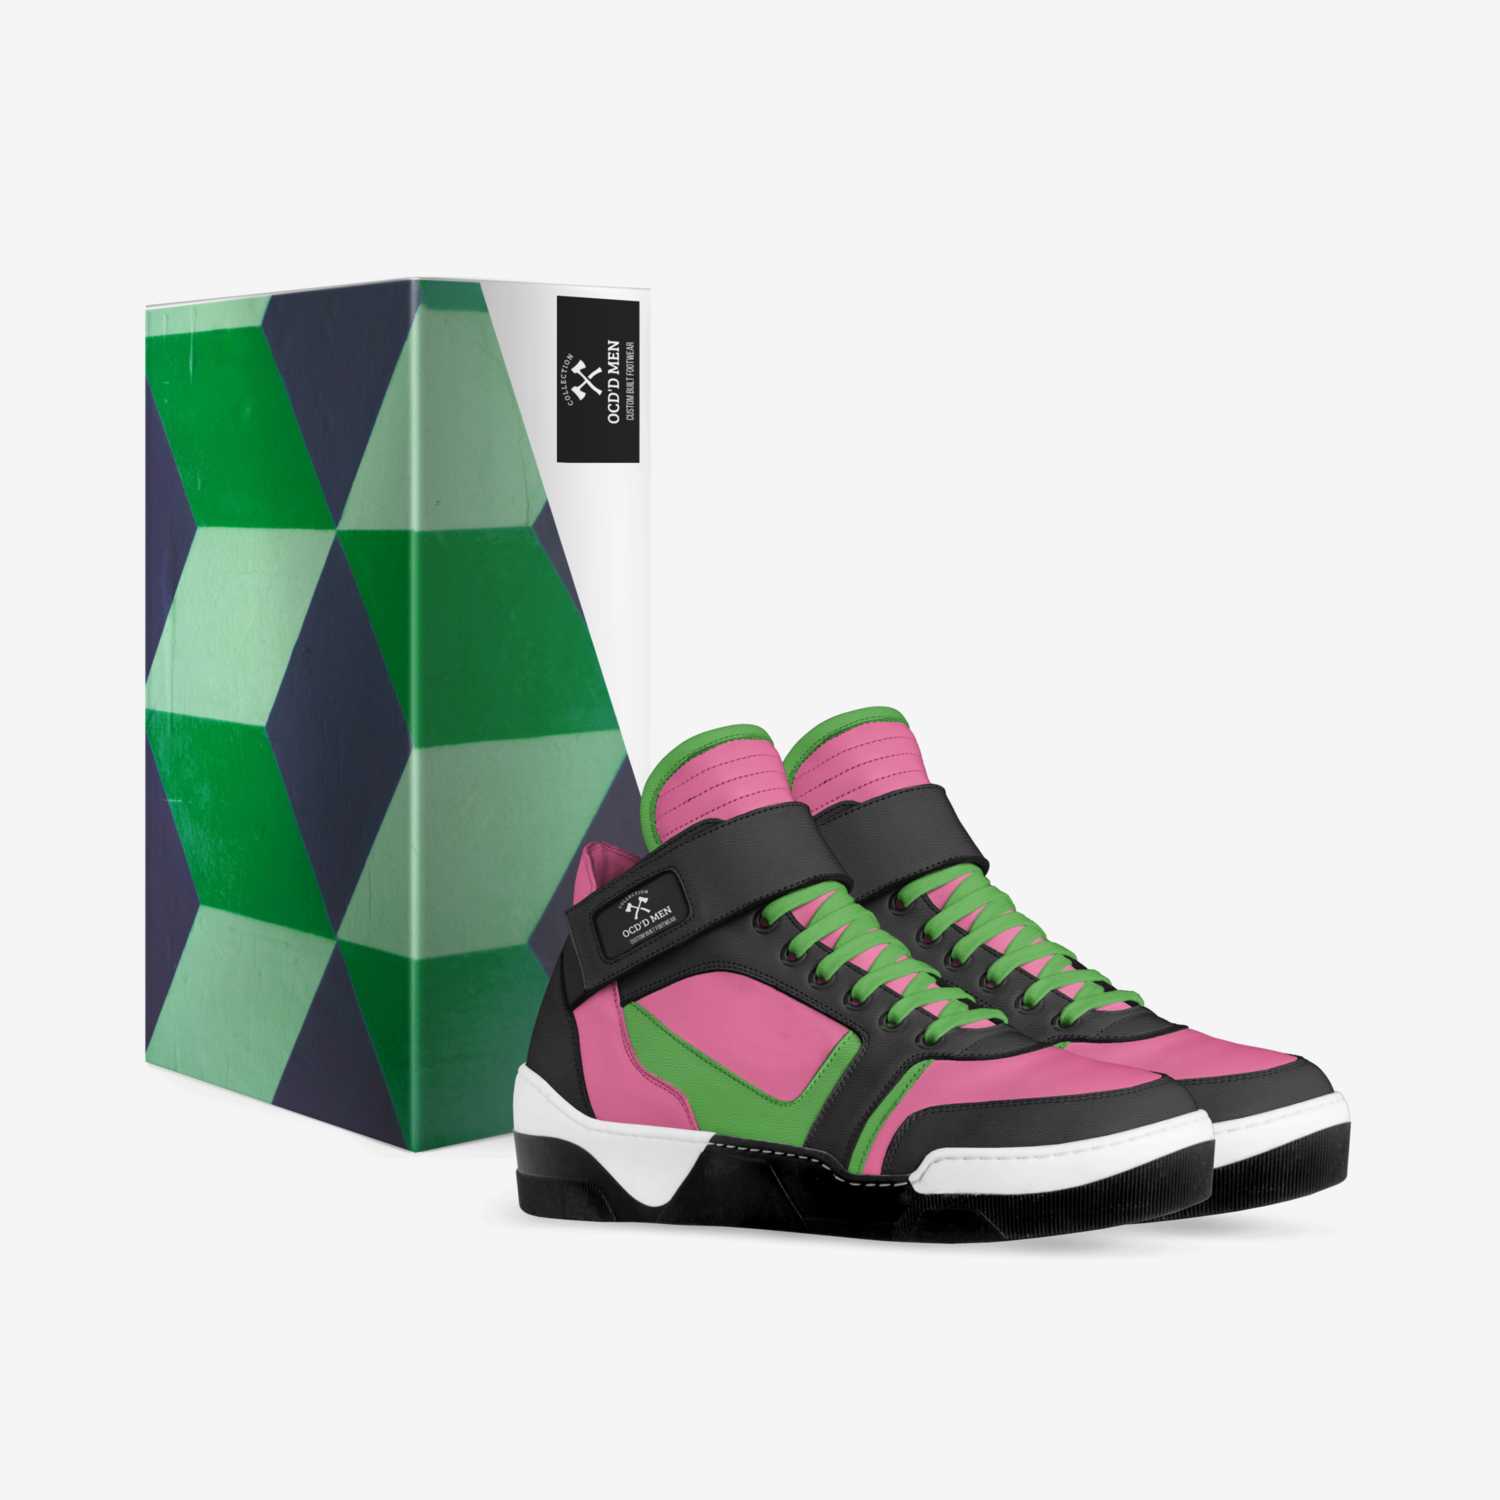 OCD'D MEN custom made in Italy shoes by Maneka Mathews | Box view